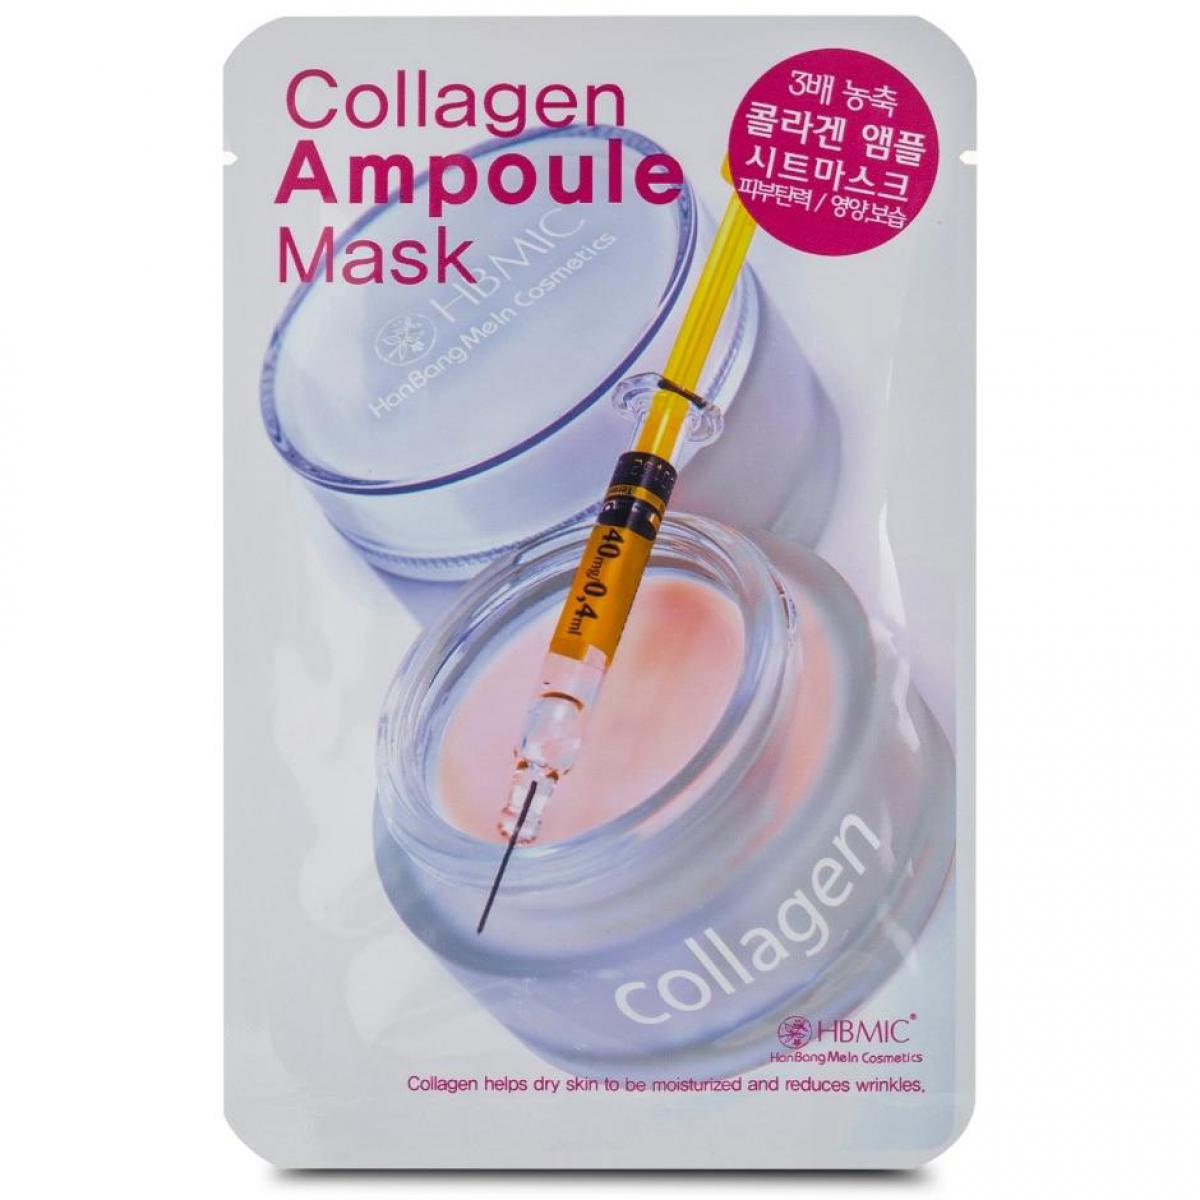 ماسک کلاژن کره ای - collagen ampoule mask